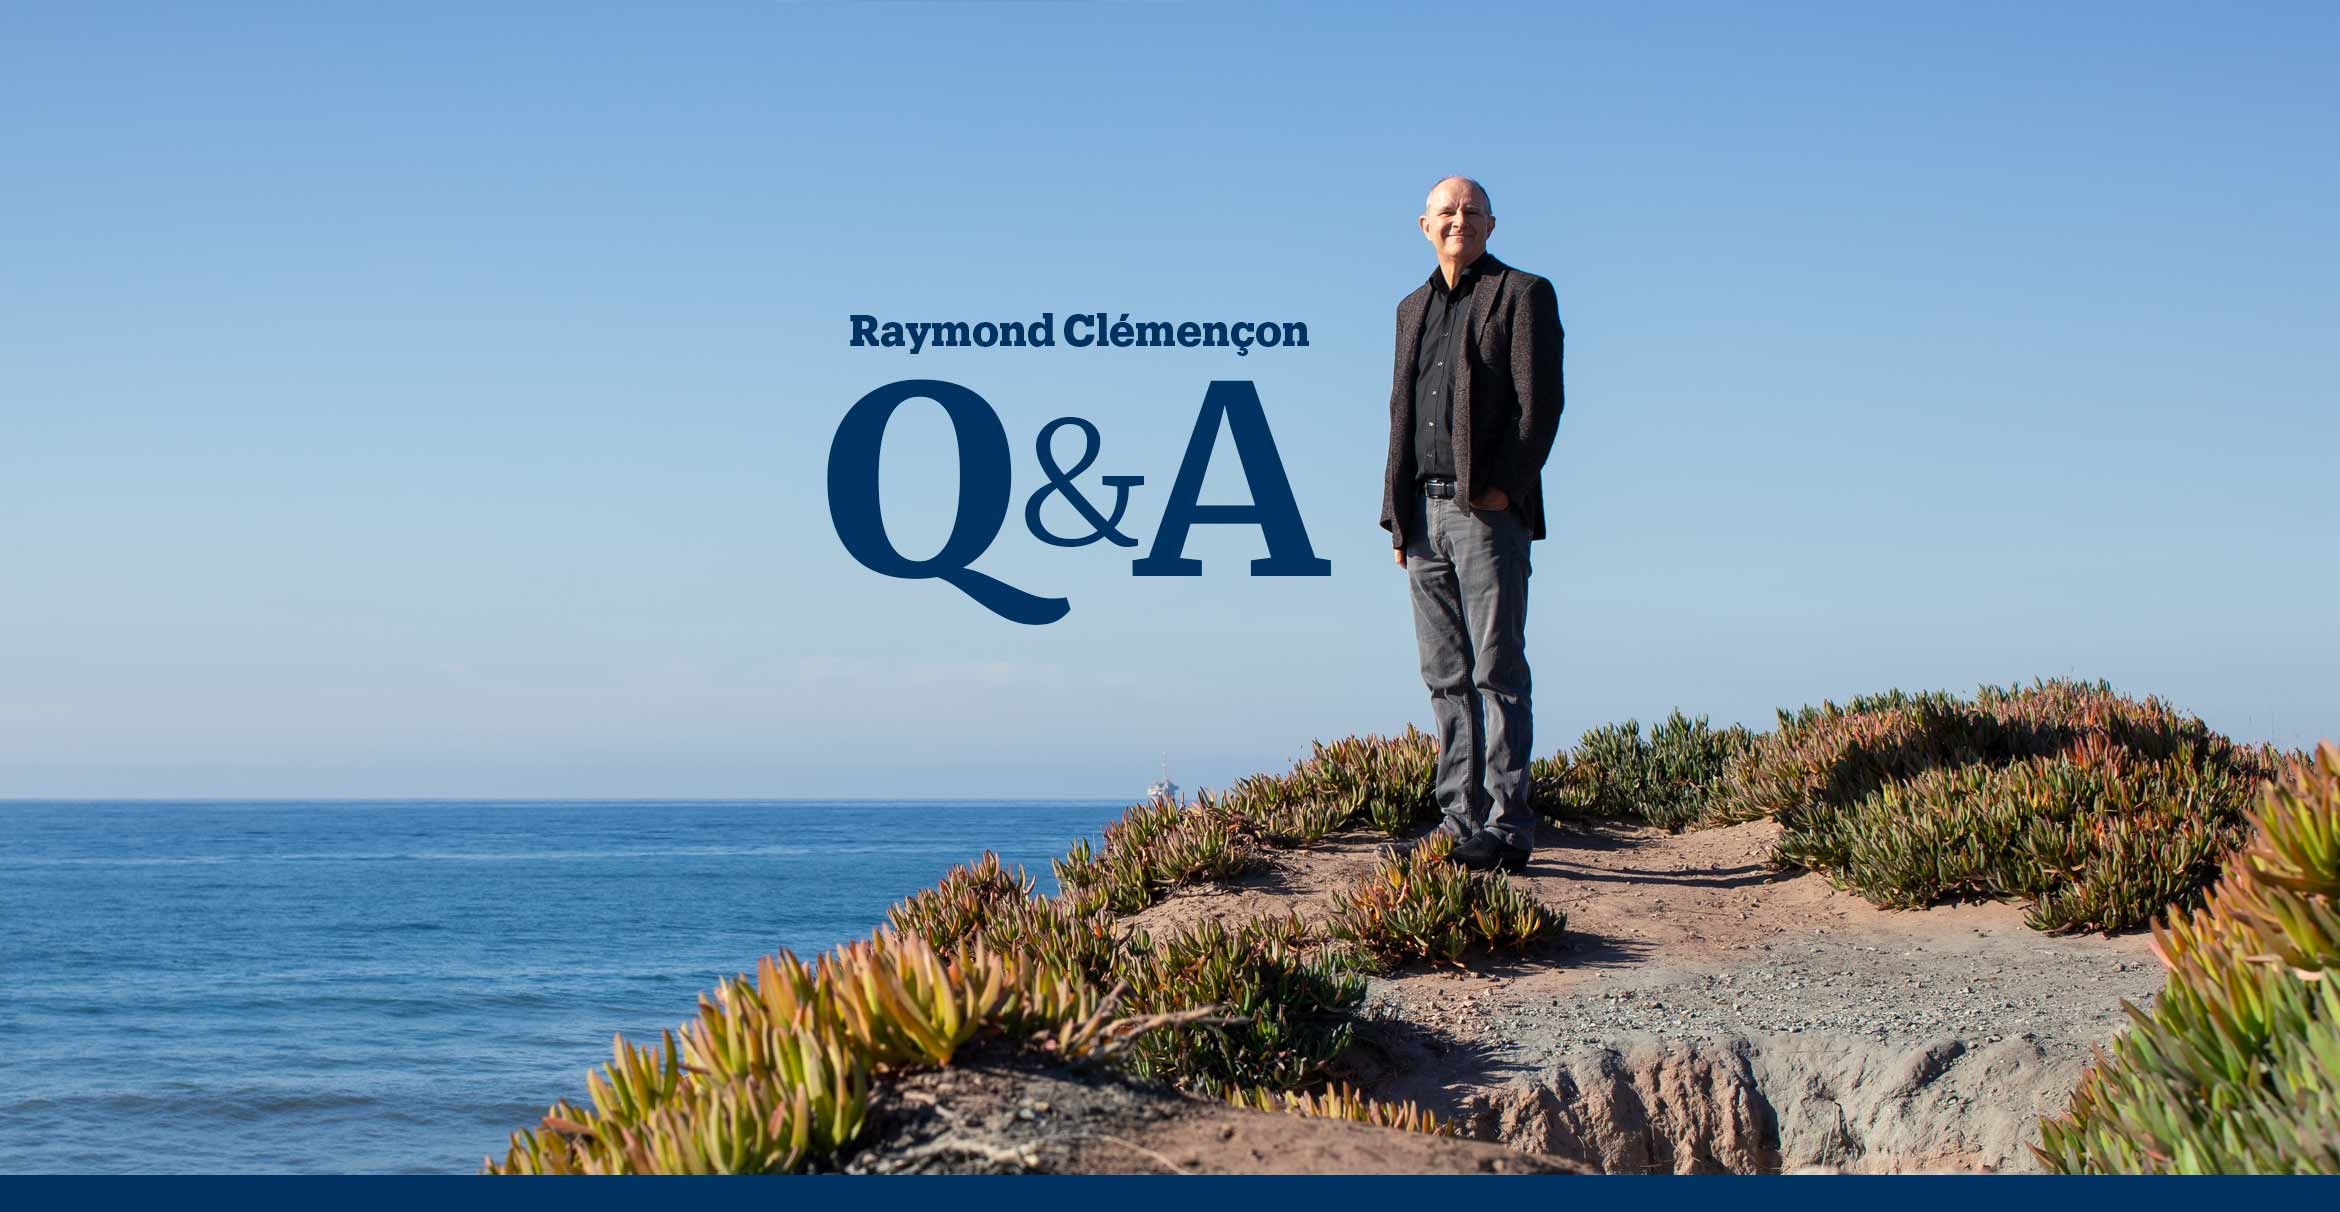 Professor Raymond Clemencon on a bluff overlooking the ocean